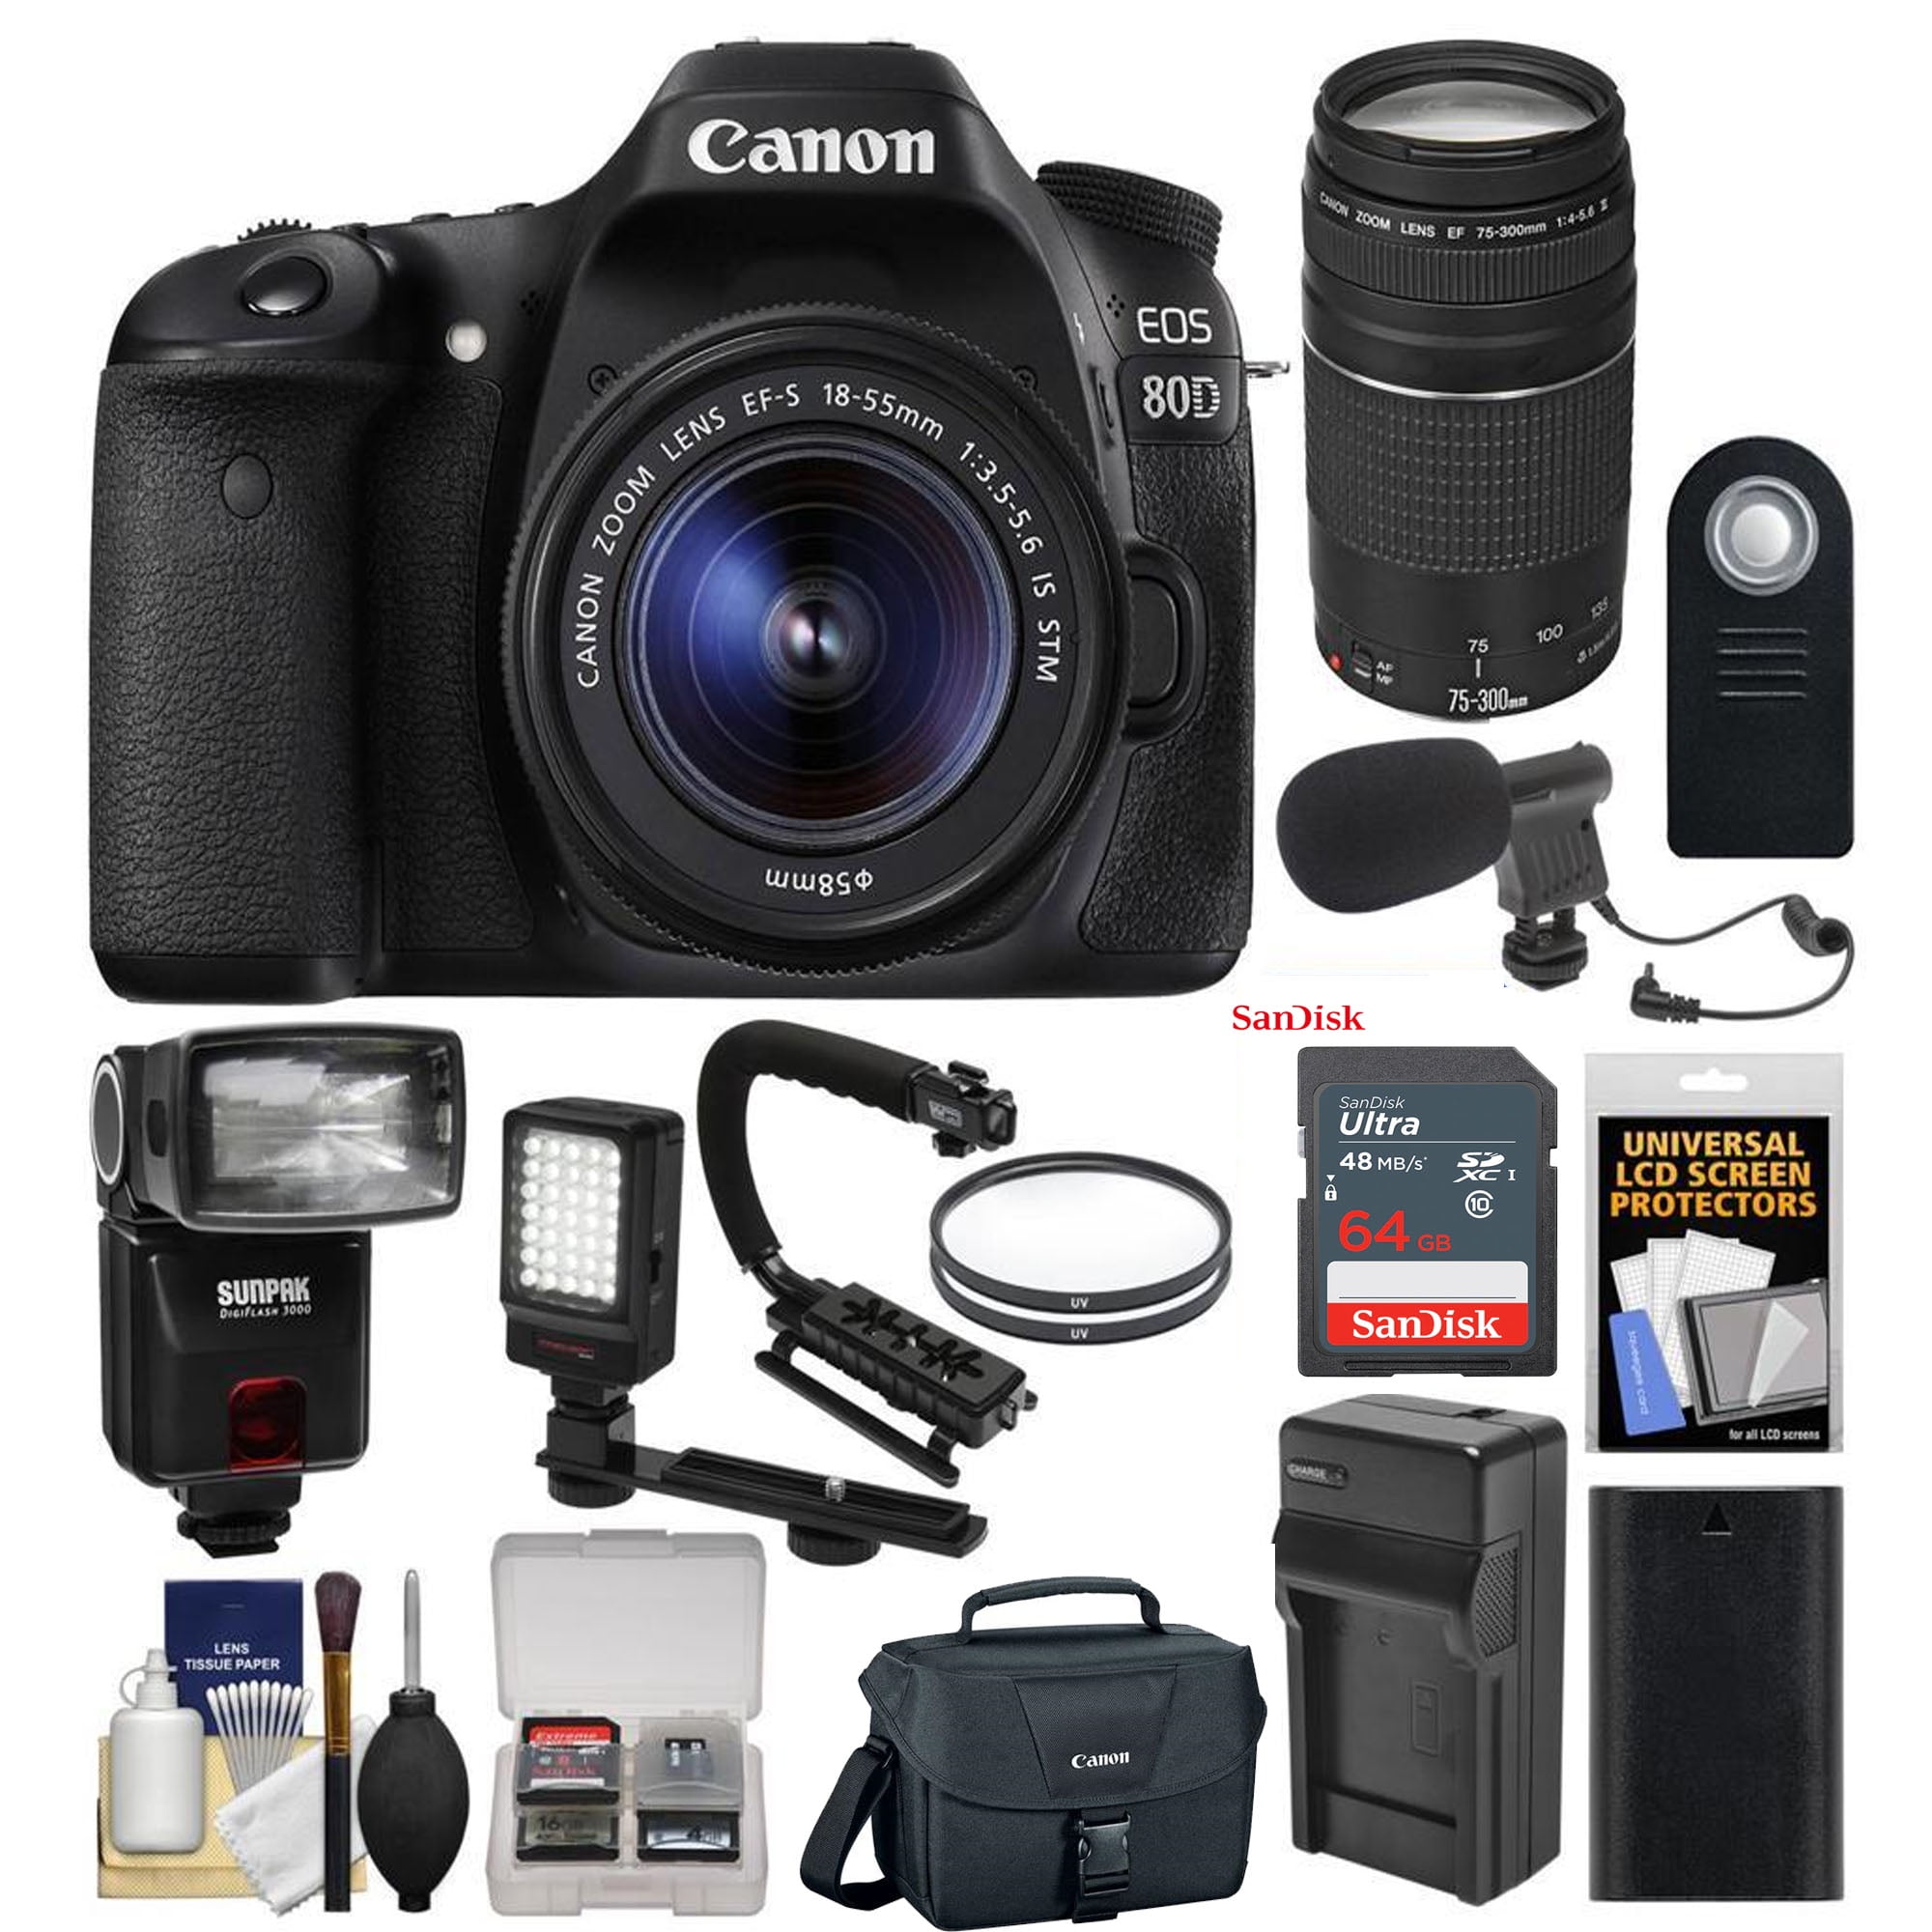 Canon EOS 80D Wi-Fi Digital SLR Camera & EF-S 18-55mm IS STM w/ 75